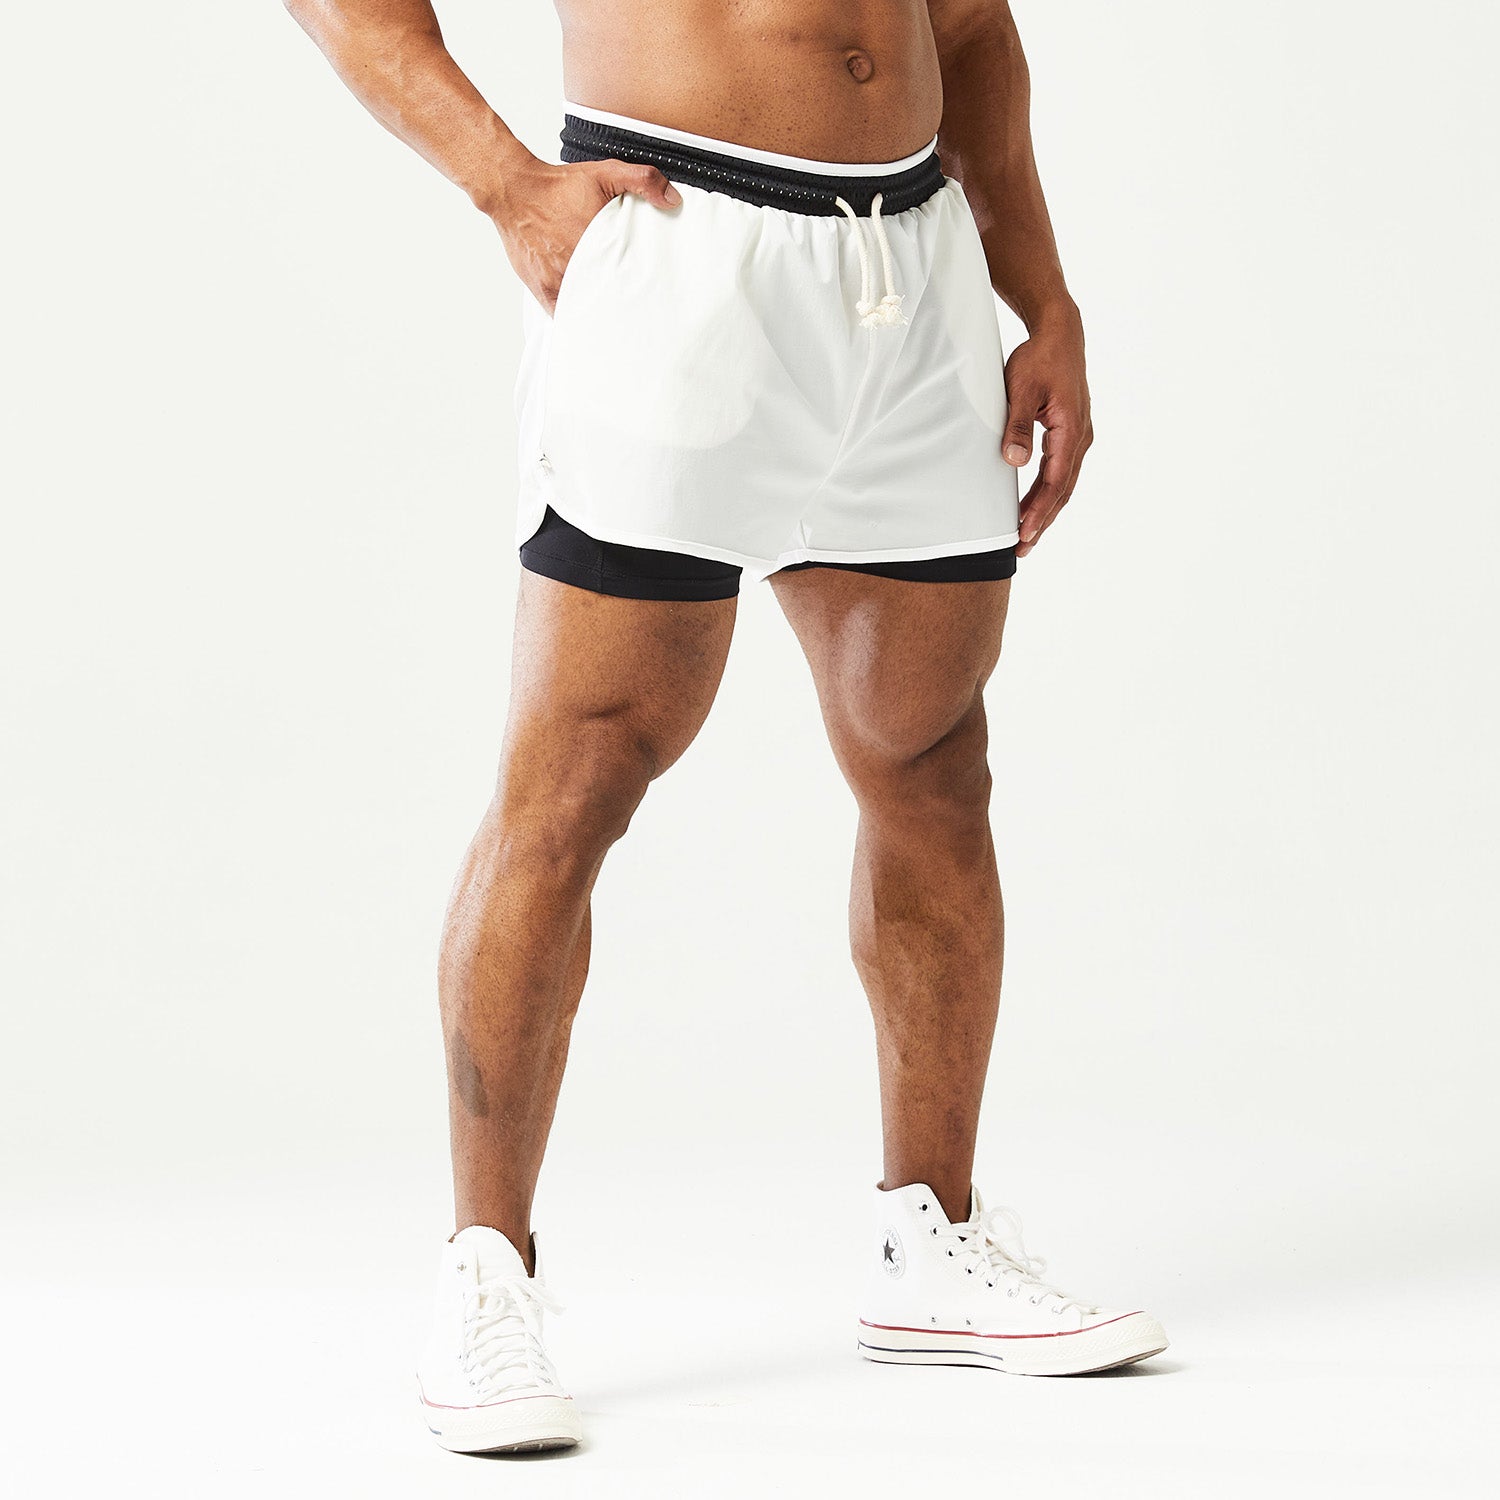 SQUATWOF-gym-wear-golden-era-2-in-1-shorts-white-workout-shorts-for-men